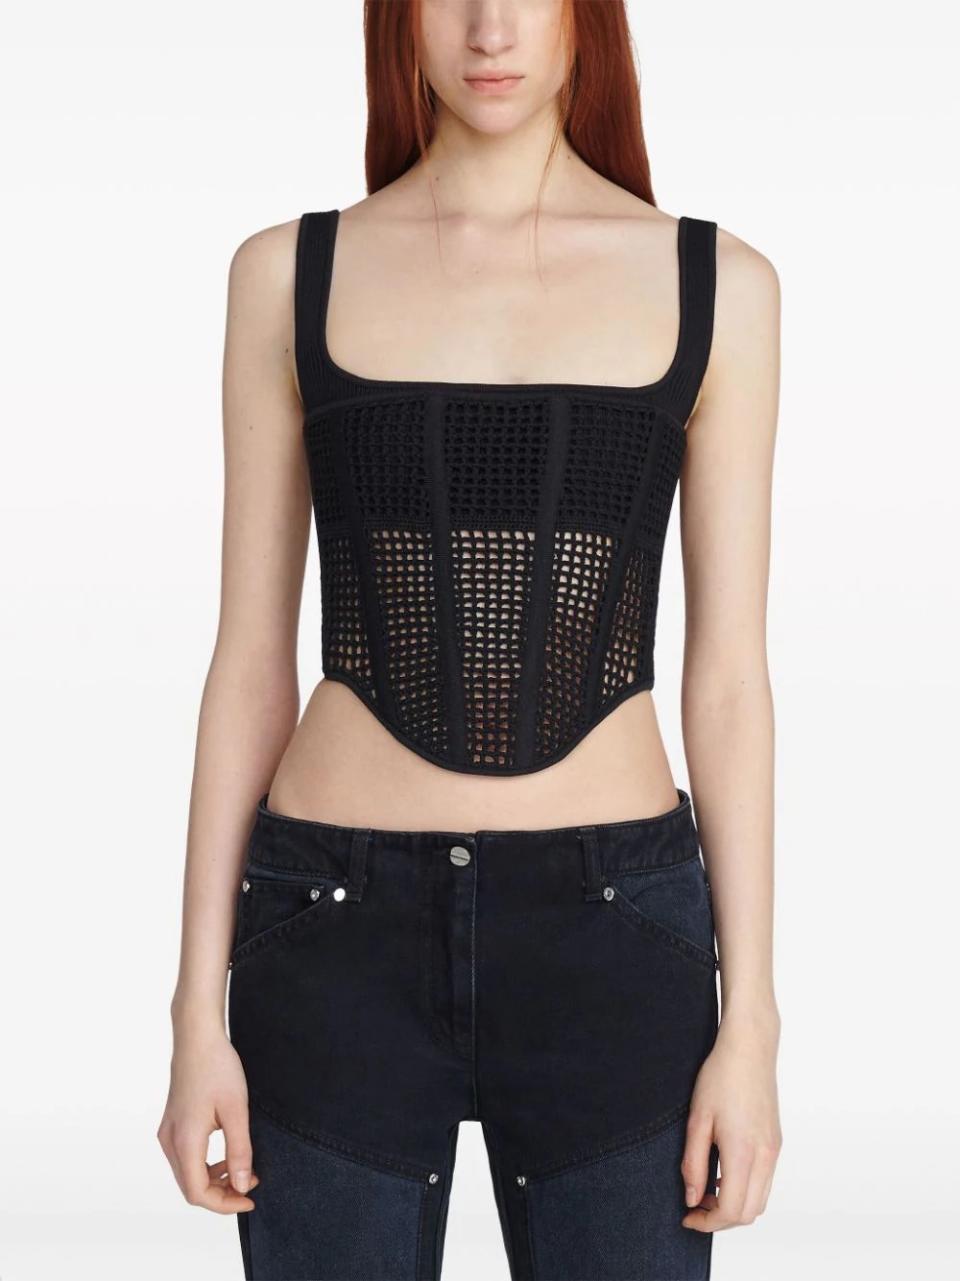 model wearing black crochet top with jeans